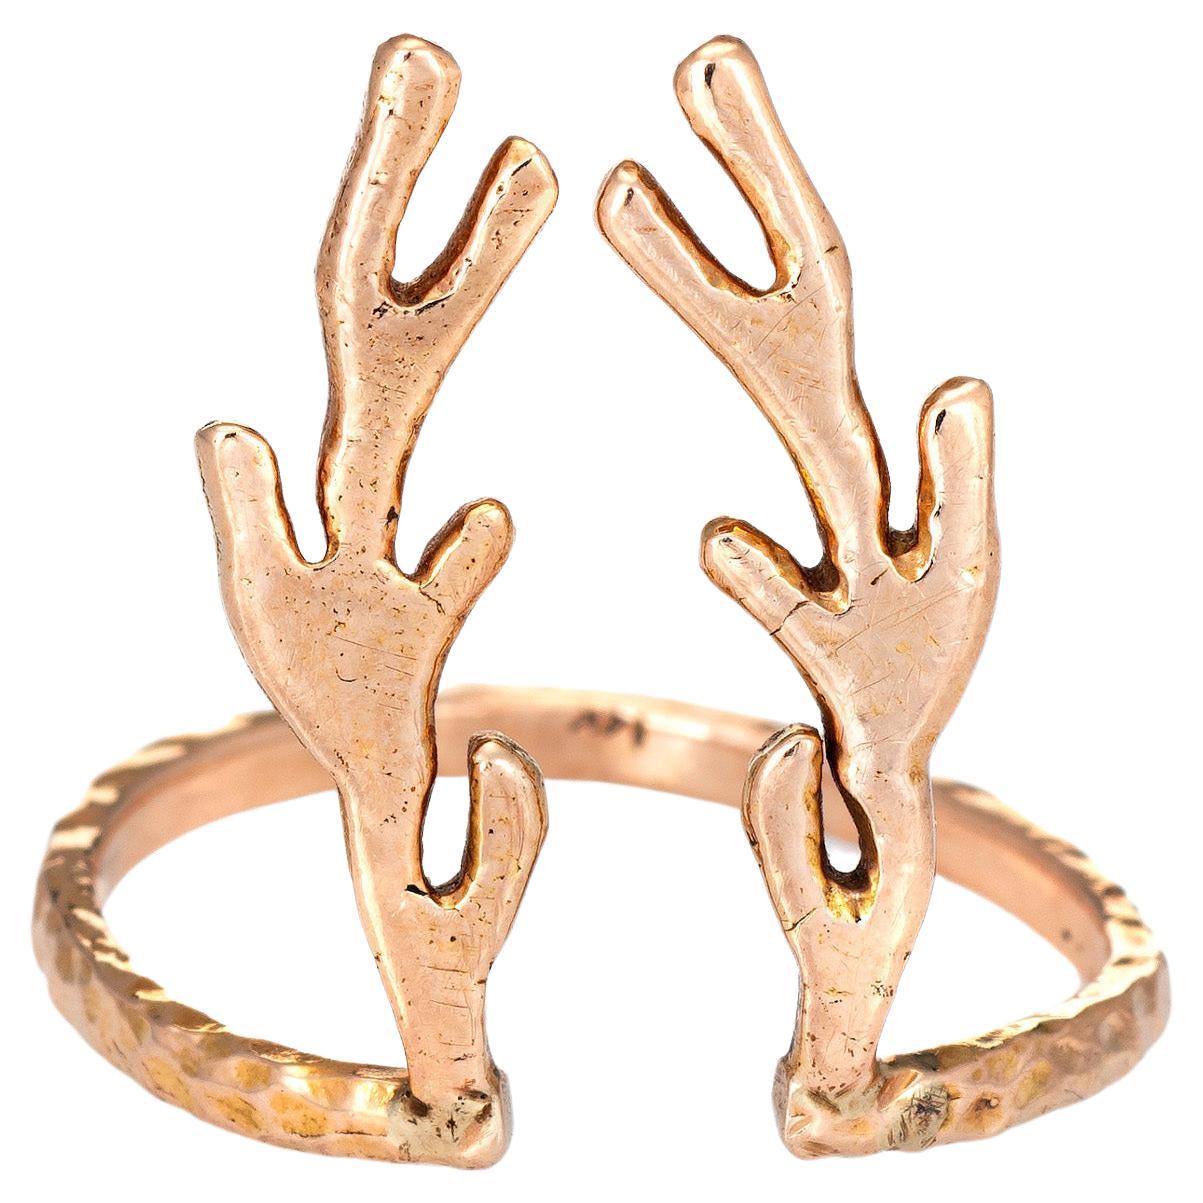 Art Deer Antlers Ring Estate 14k Roségold Vintage feines Tierhorn Spike Schmuck